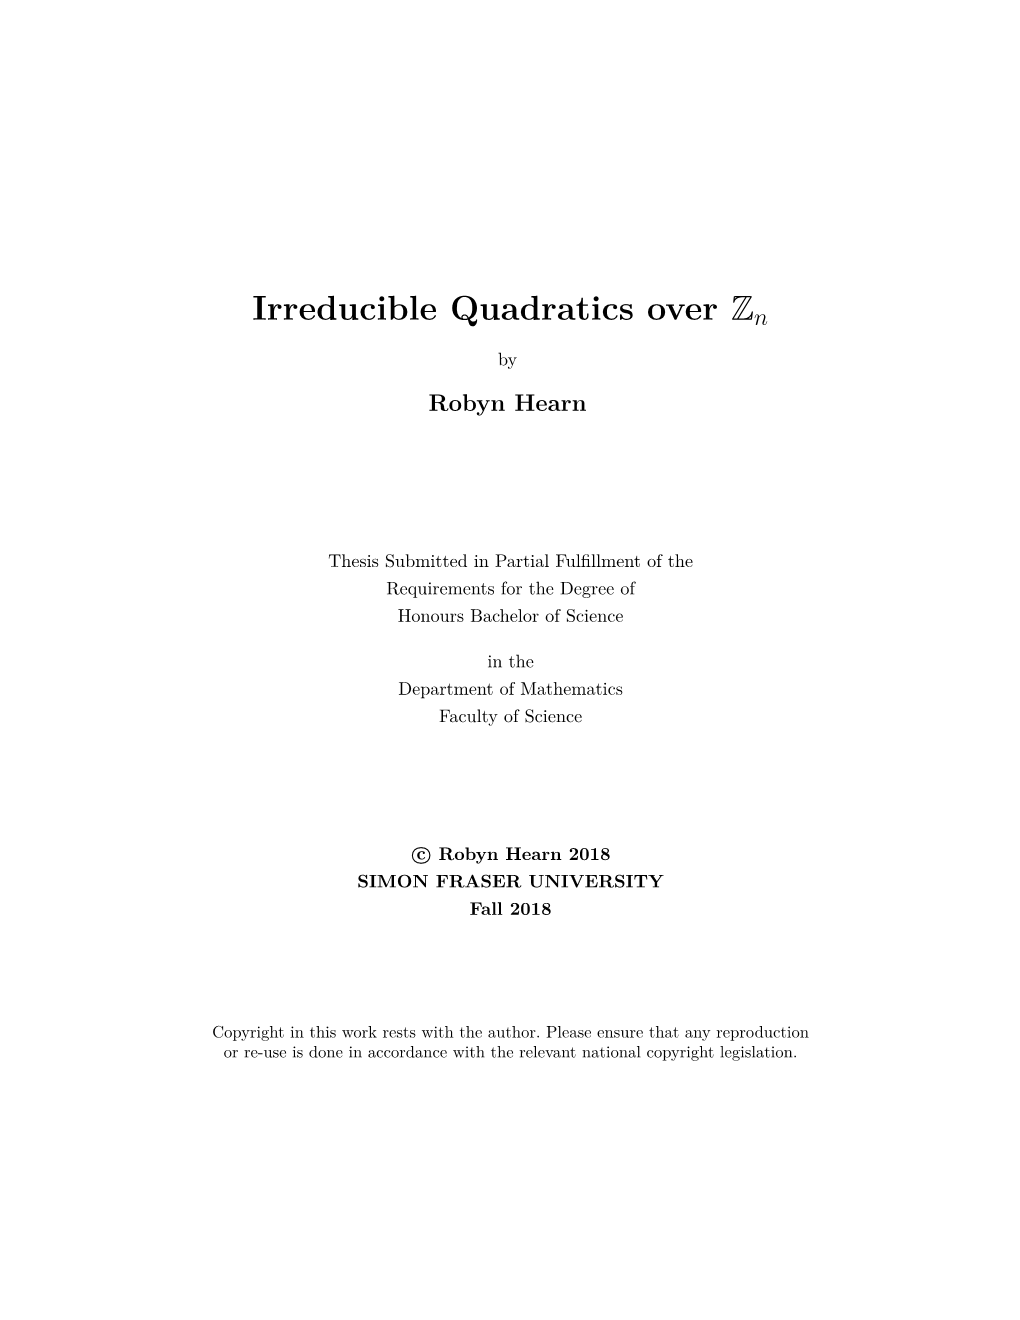 Irreducible Quadratics Over Zn by Robyn Hearn